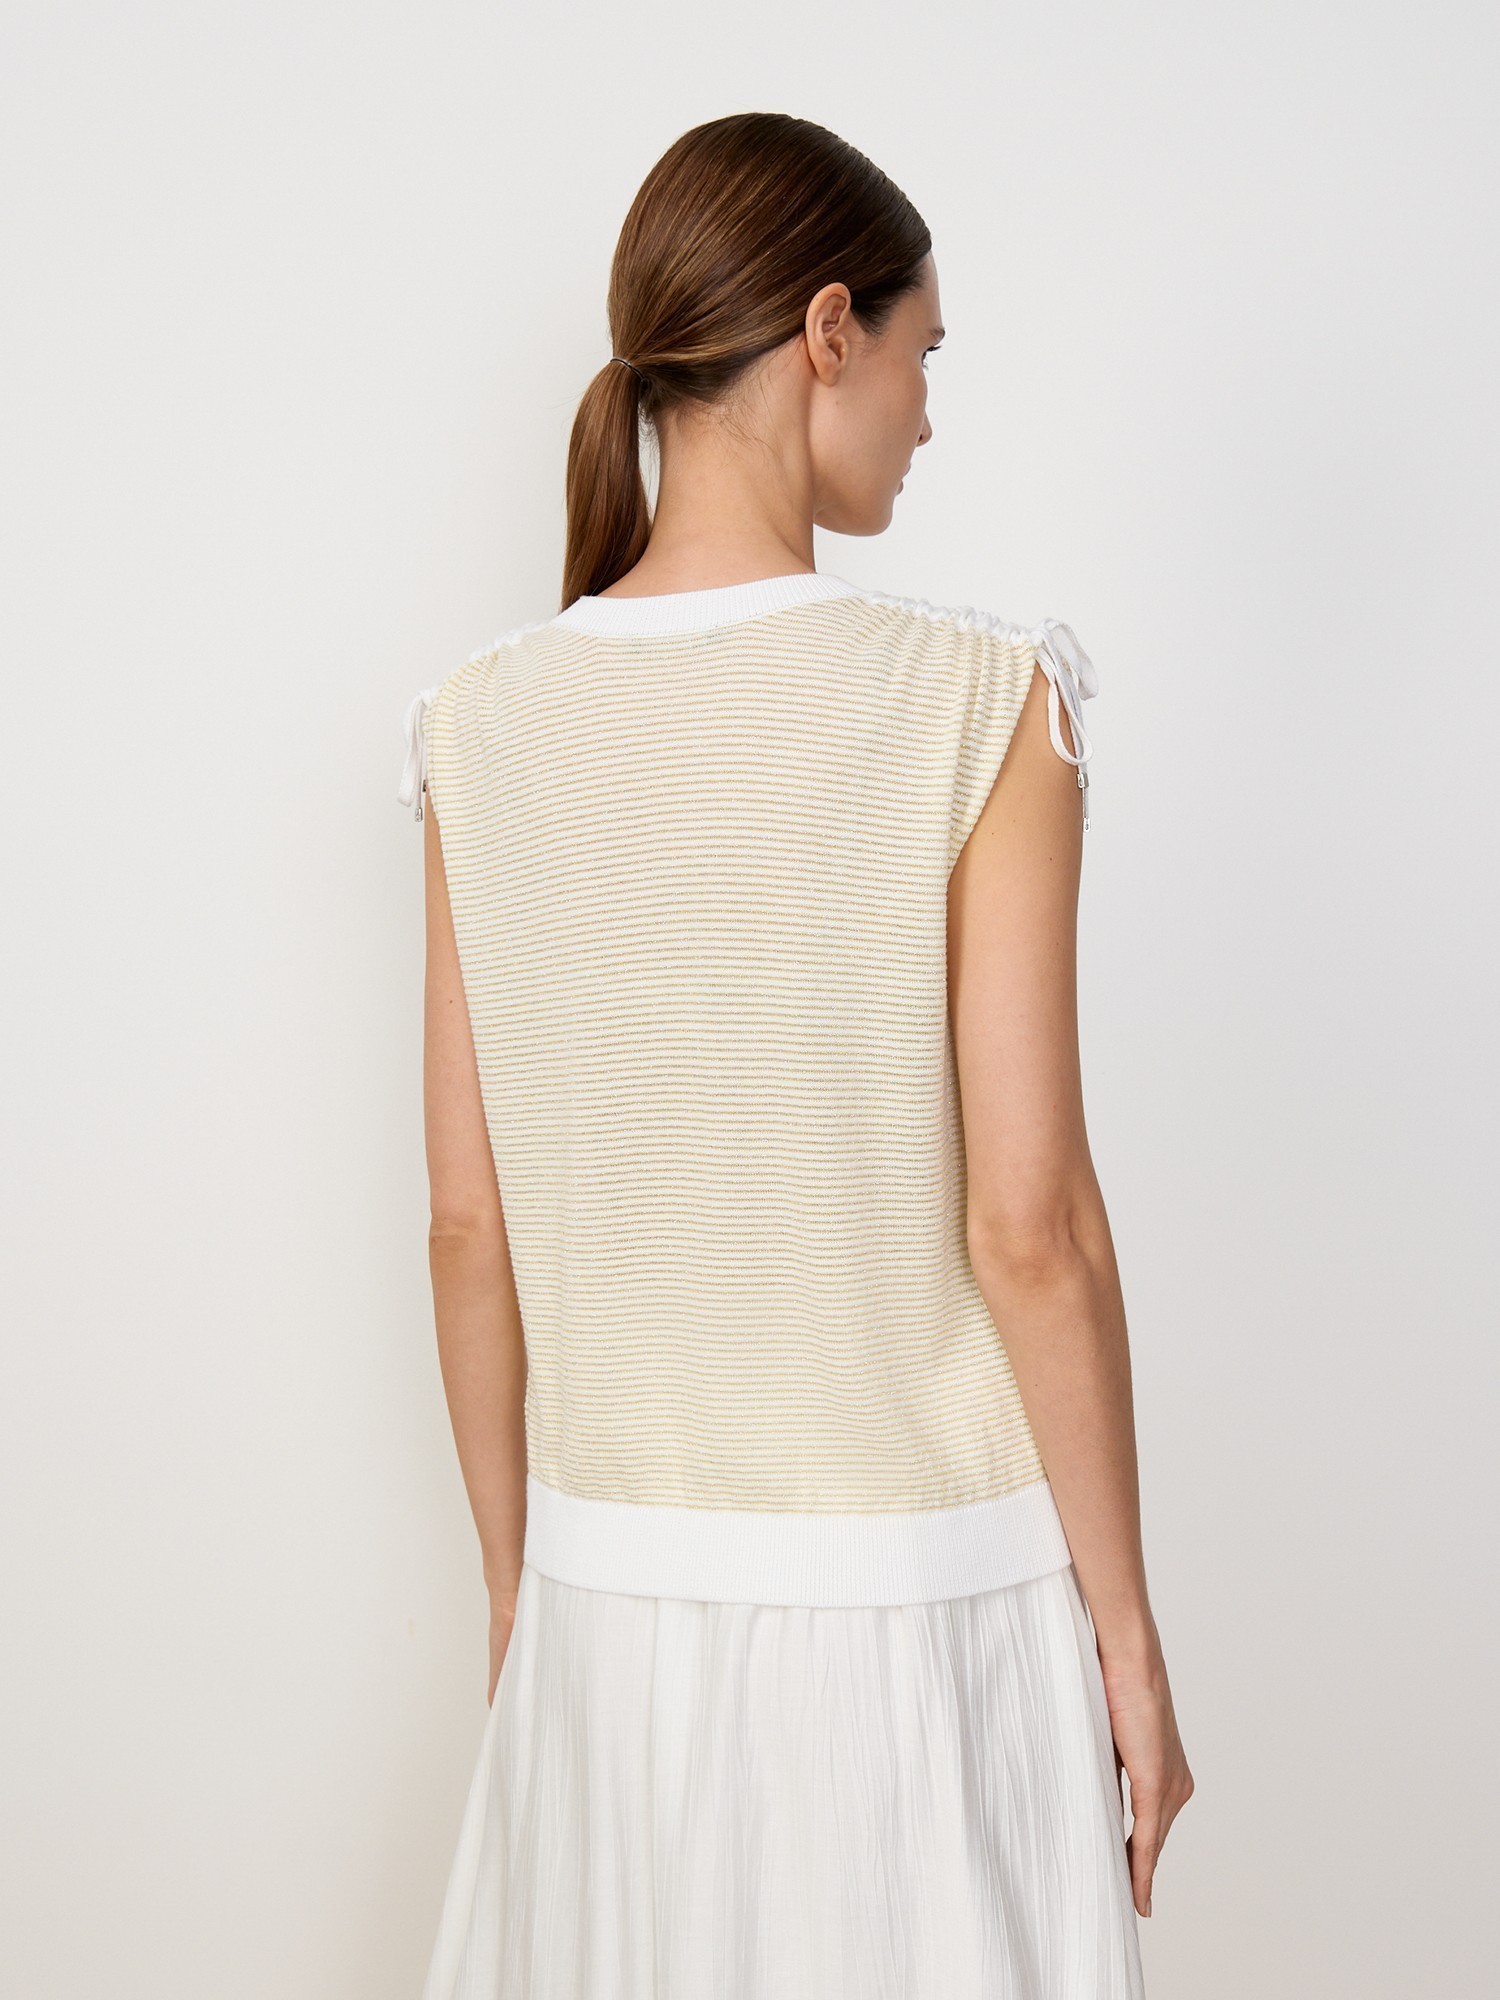 Вязаная блуза с люрексом Elis BL1054V, цвет жёлто-белый, размер 50 - фото 4